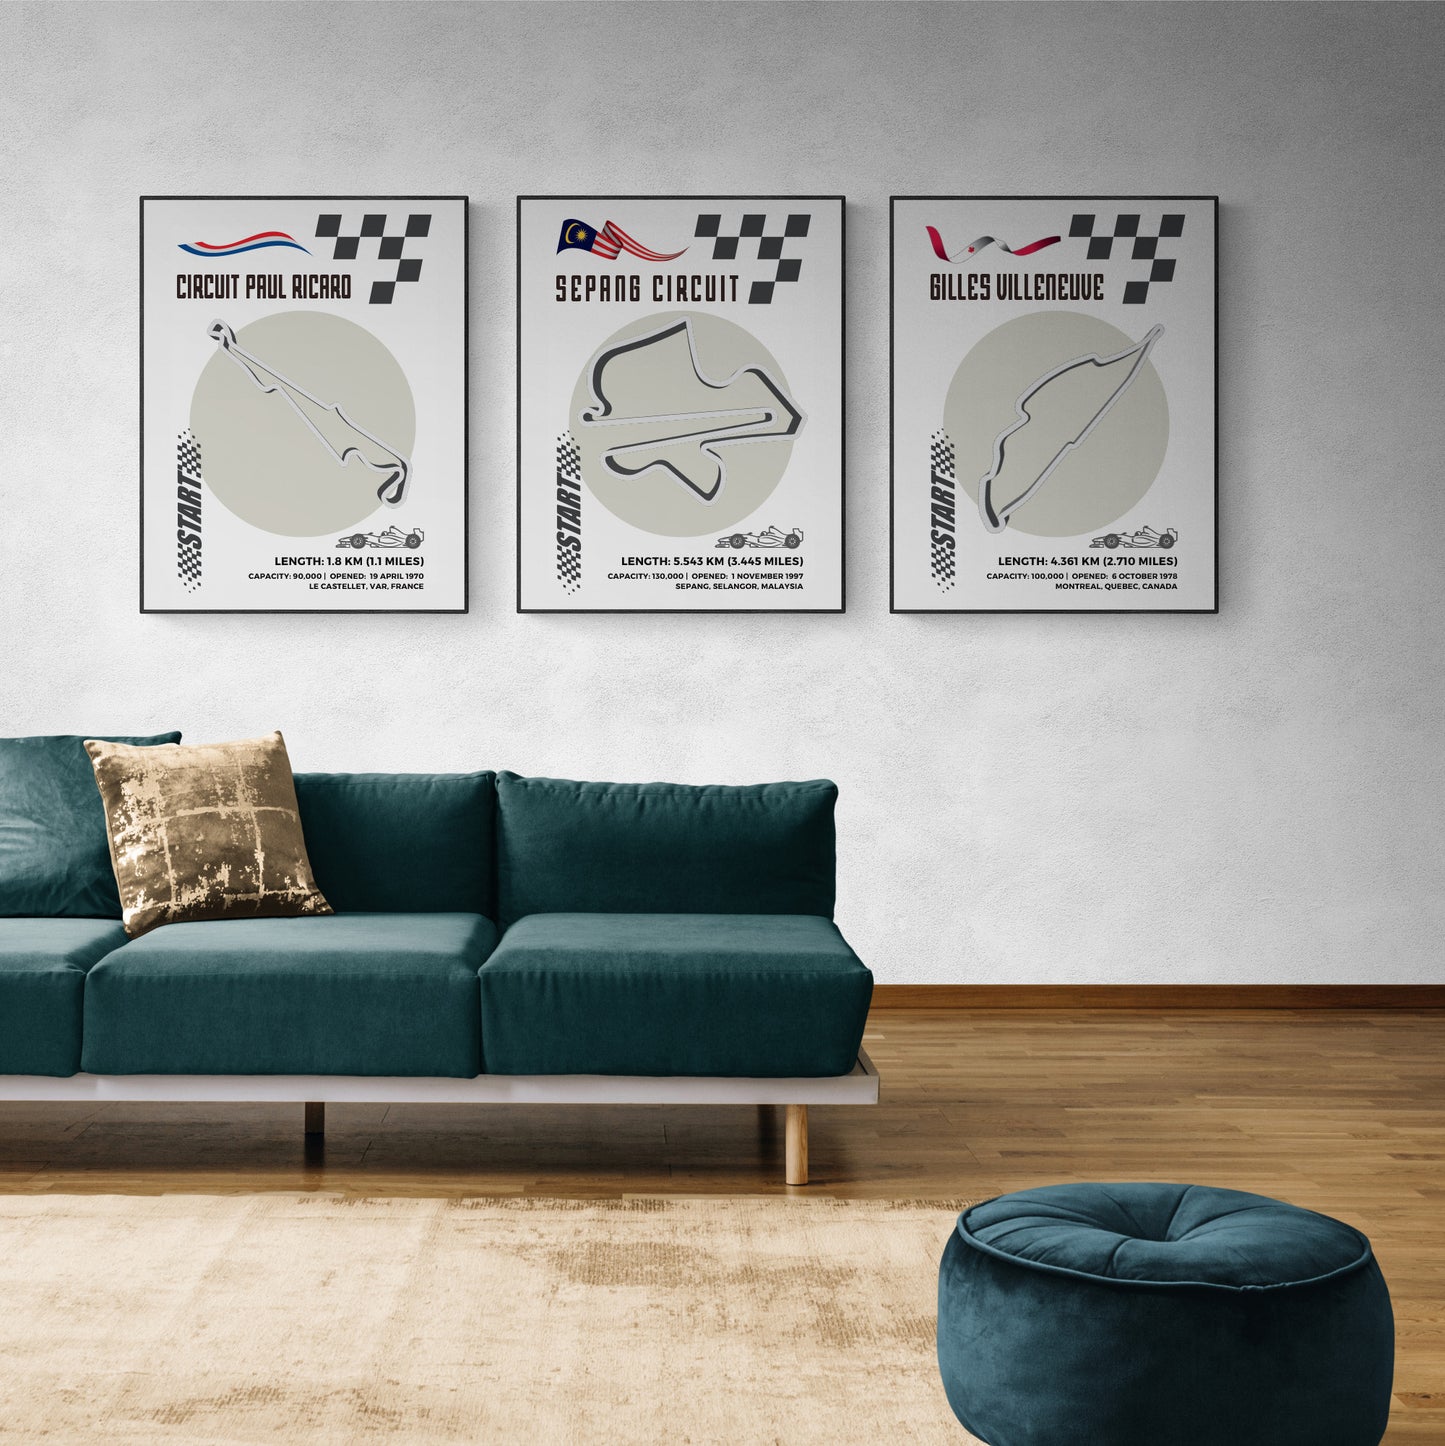 Sepang Circuit F1 posters